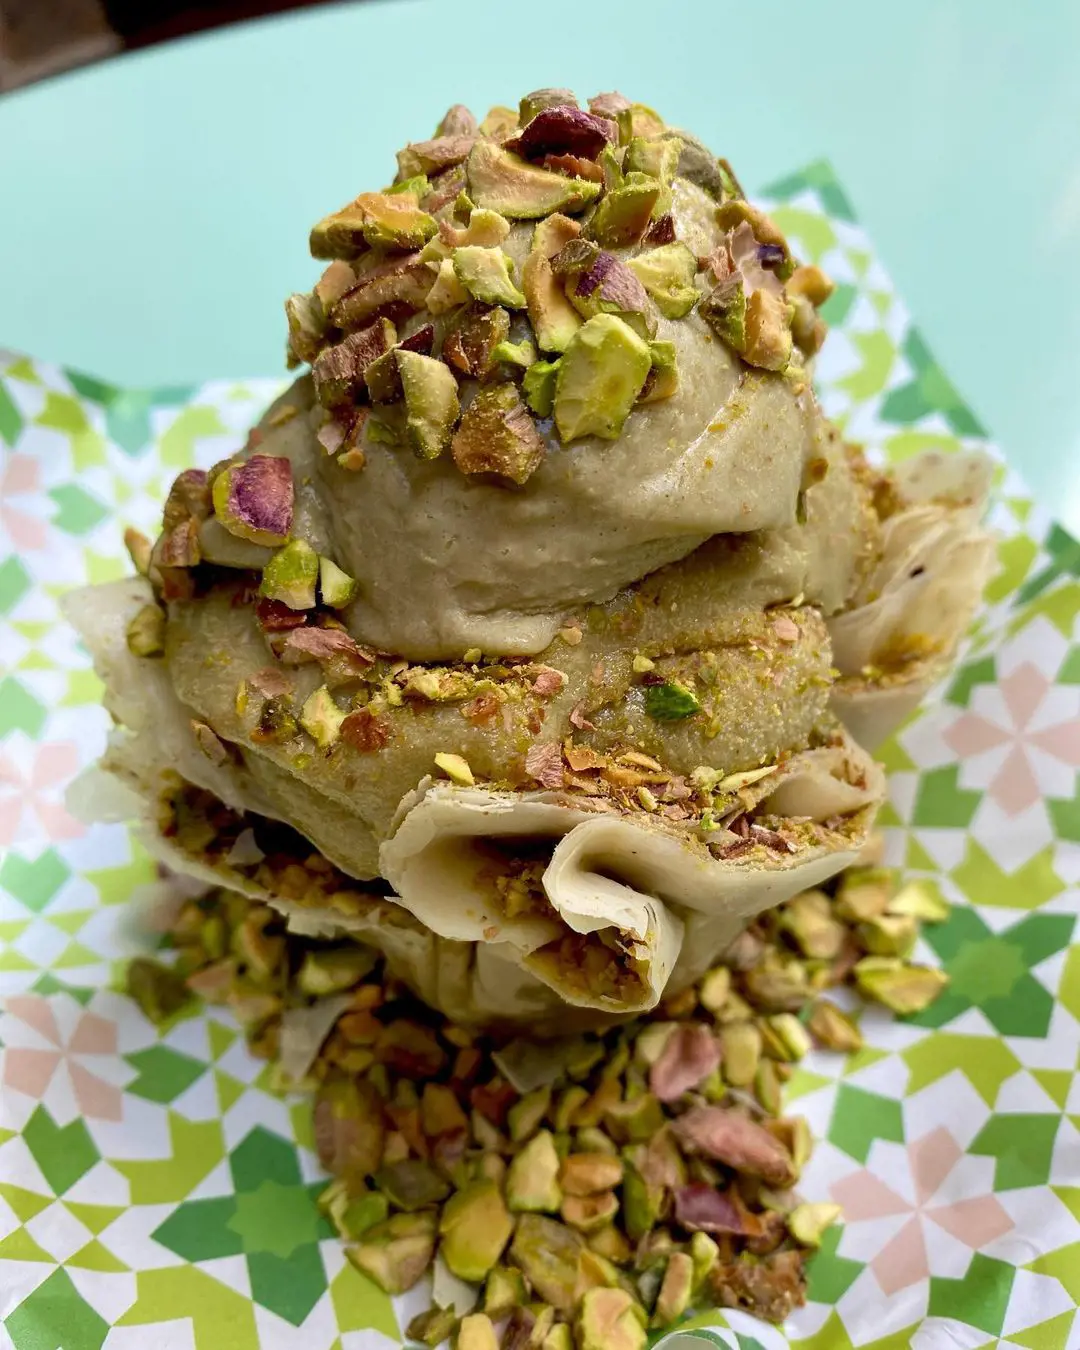 Baklava cup with pistachio ice cream